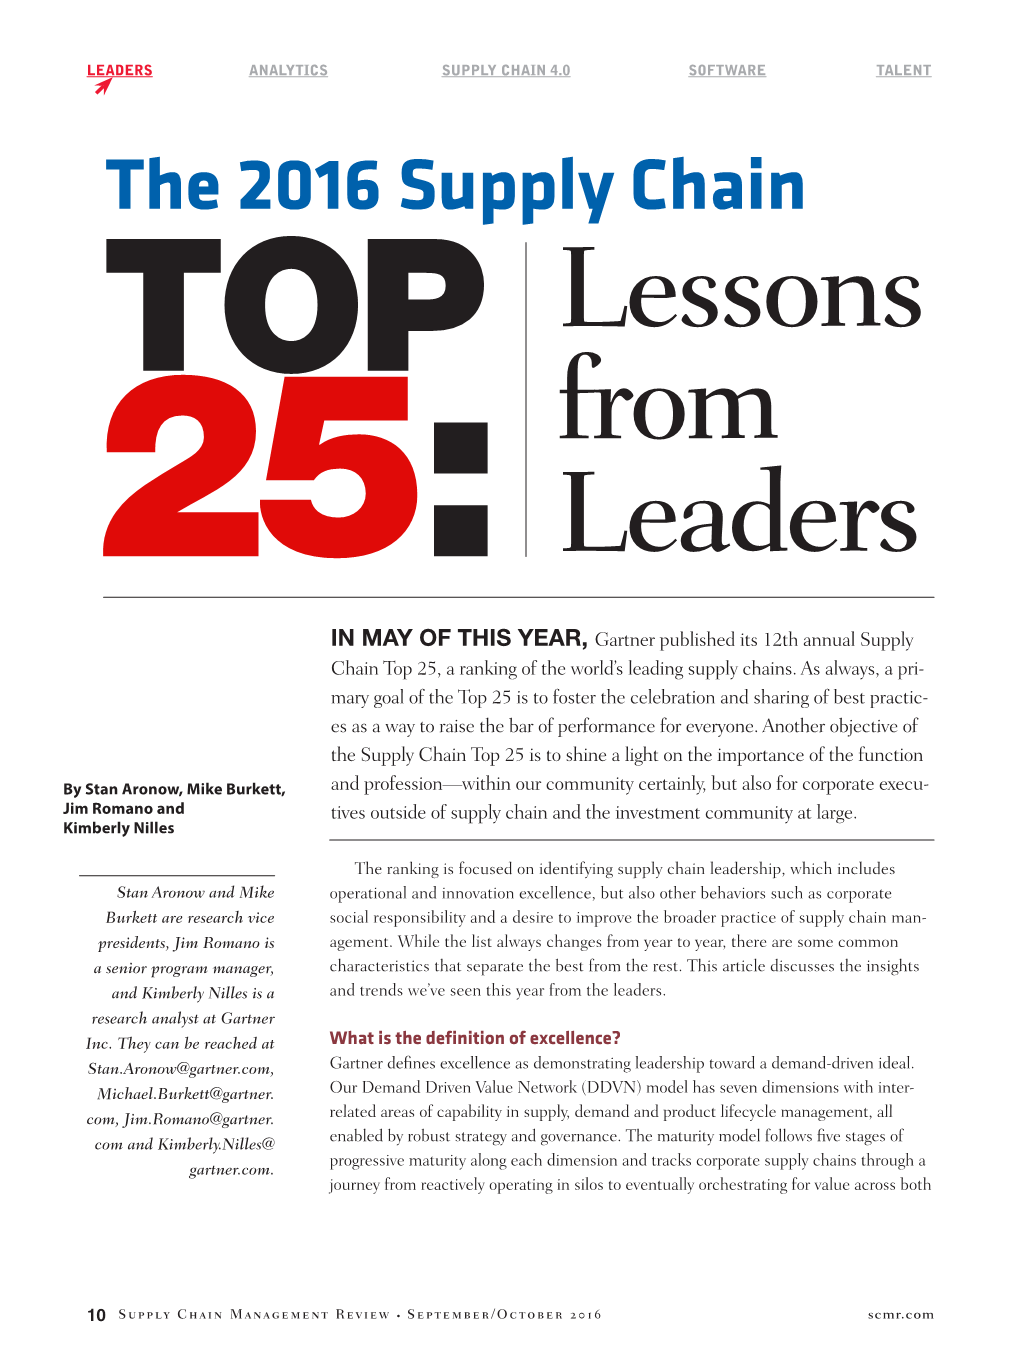 The Gartner Supply Chain Top 25 for 2016